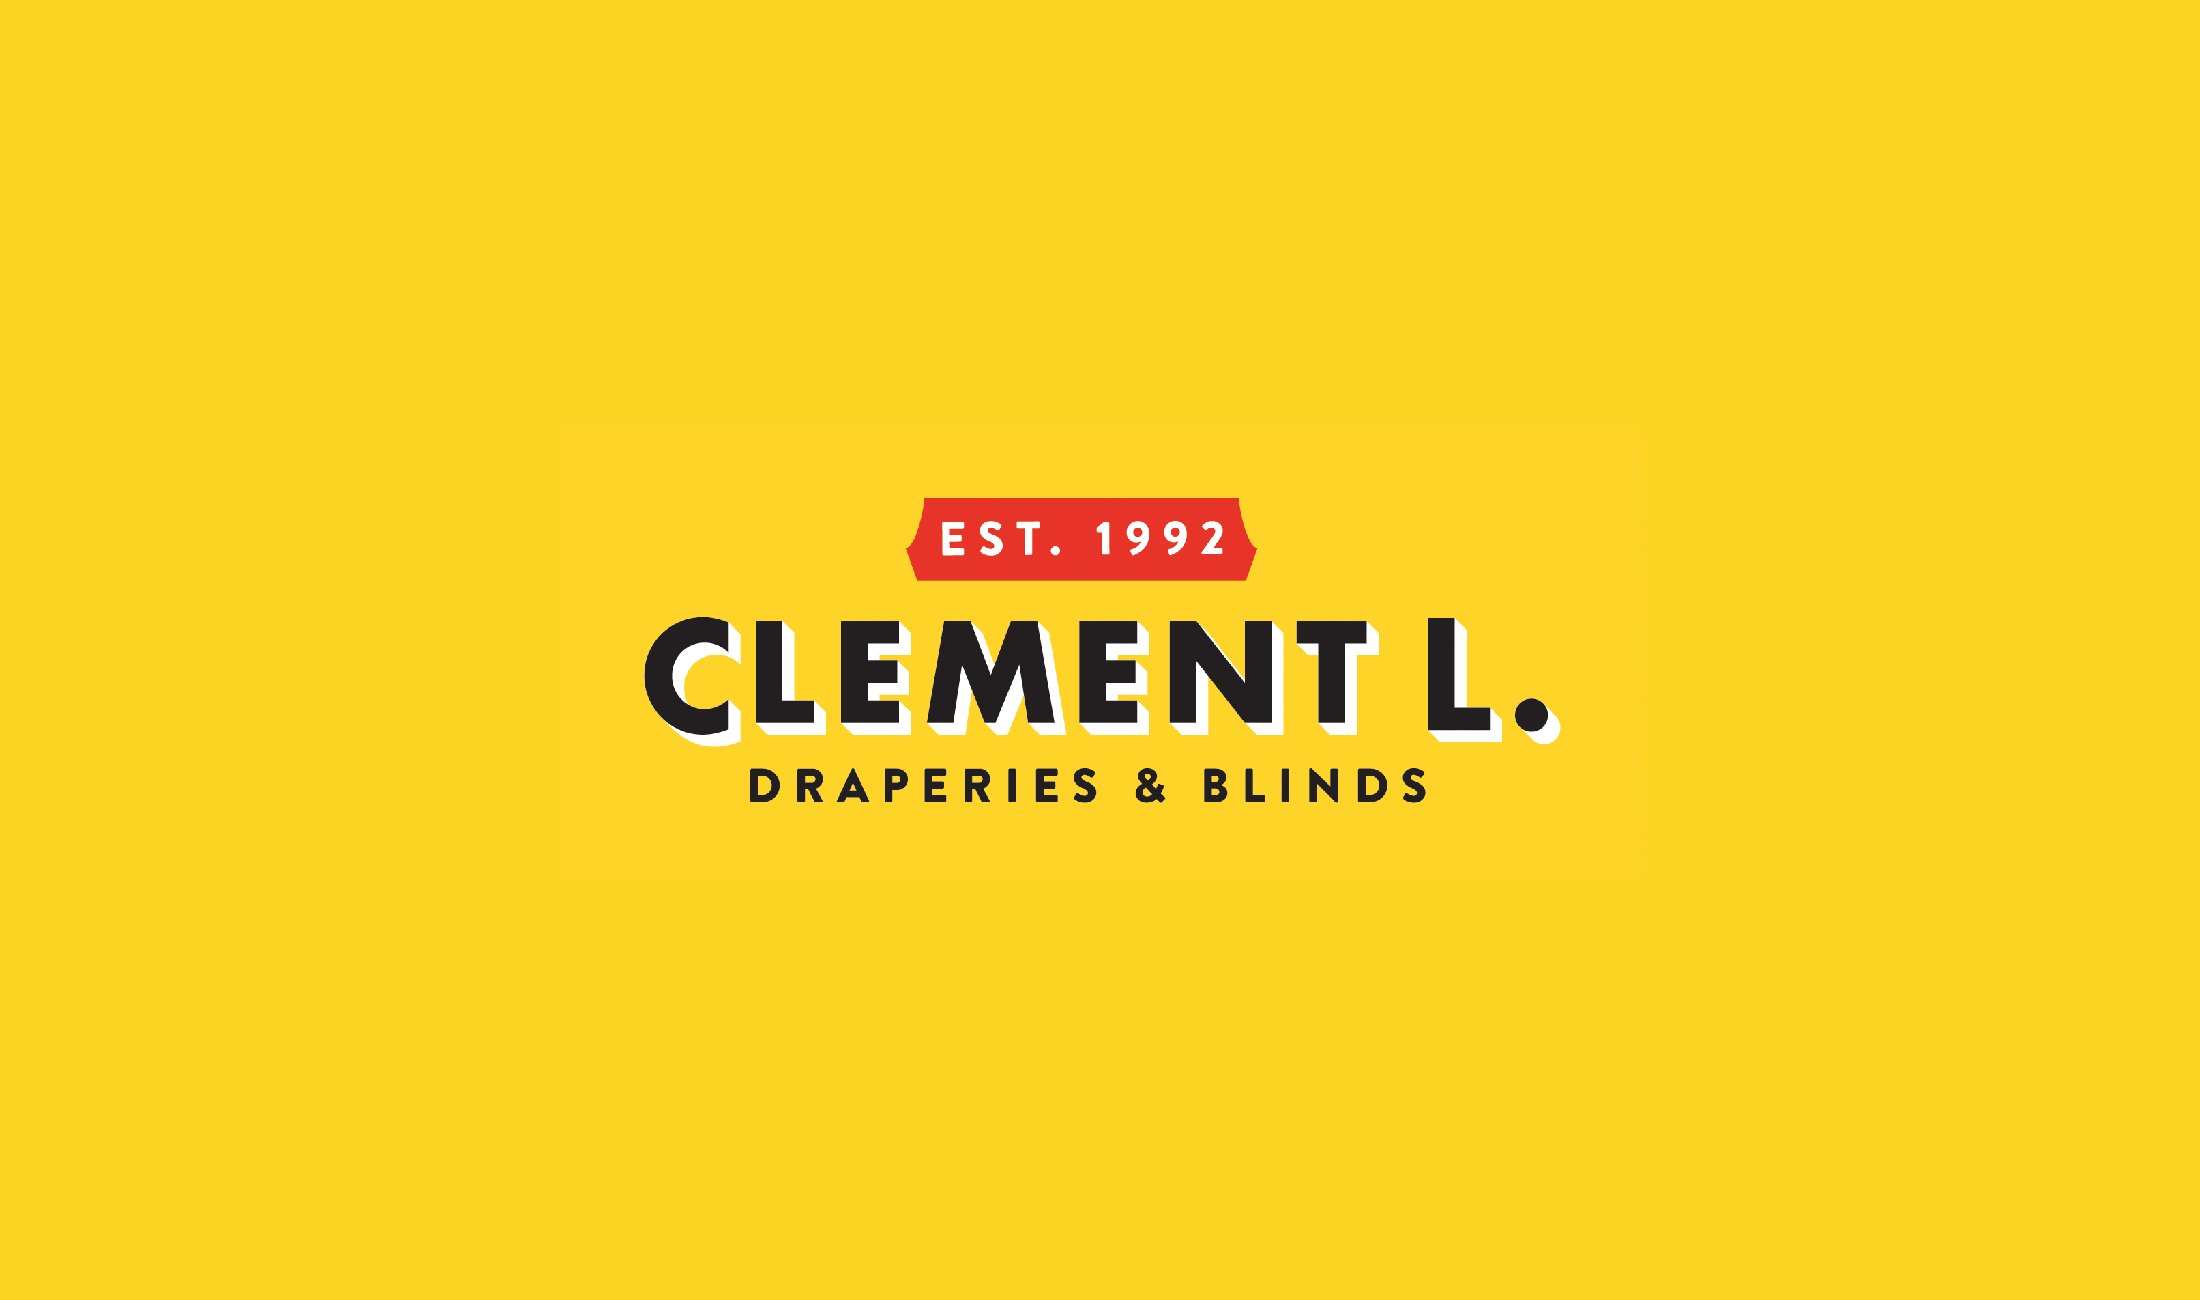 Clement L. Draperies Identity Design - Image 1